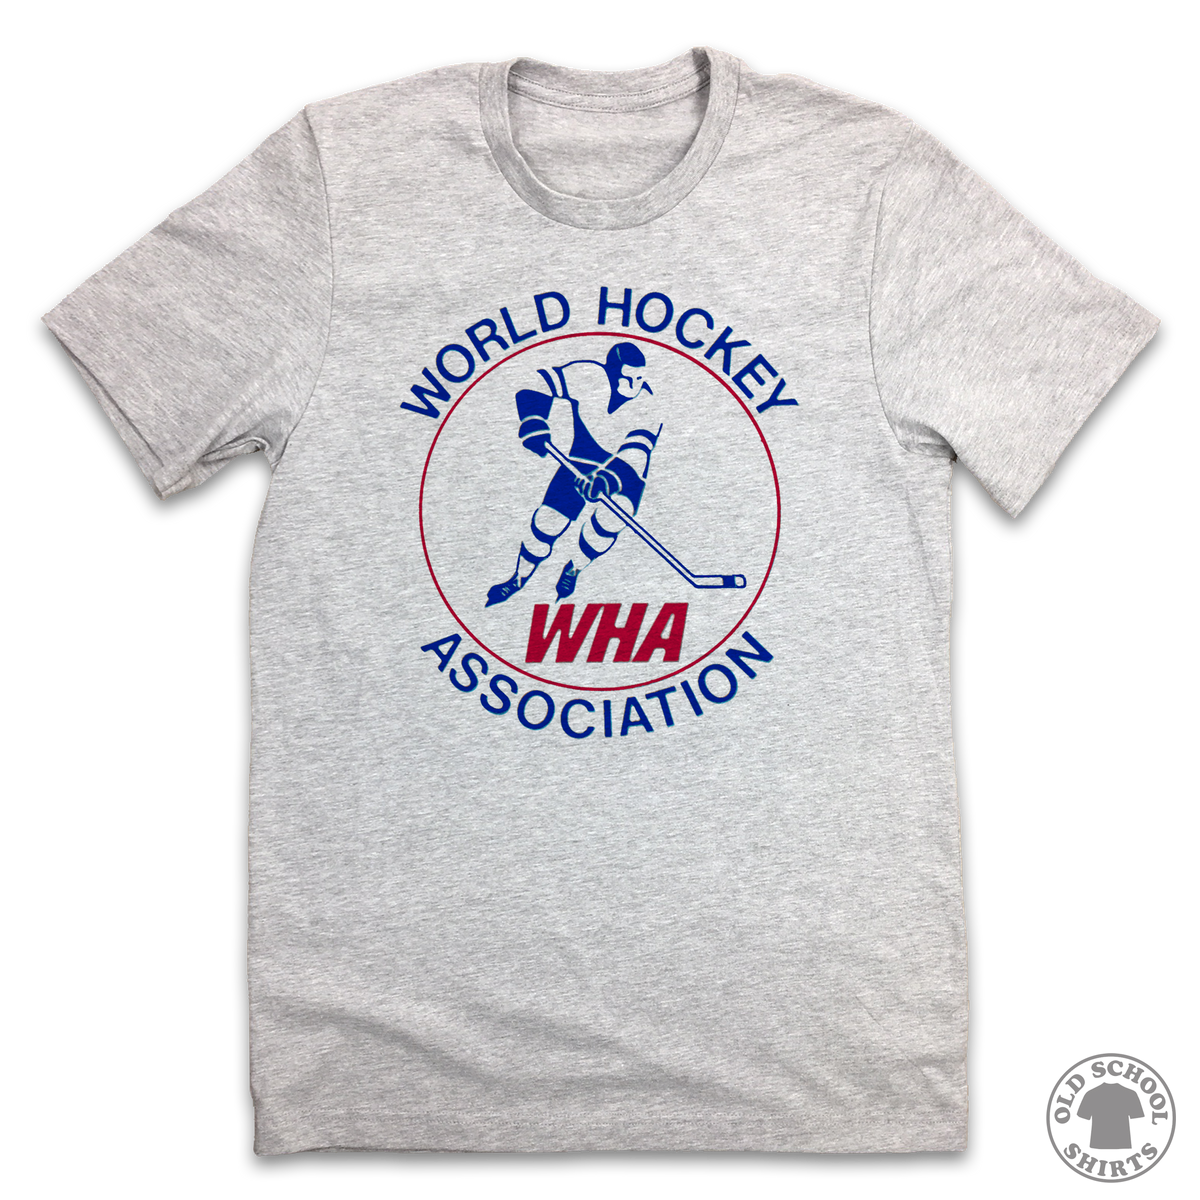 Original Retro Brand, Tops, Womens New York Rangers Long Sleeve Shirt